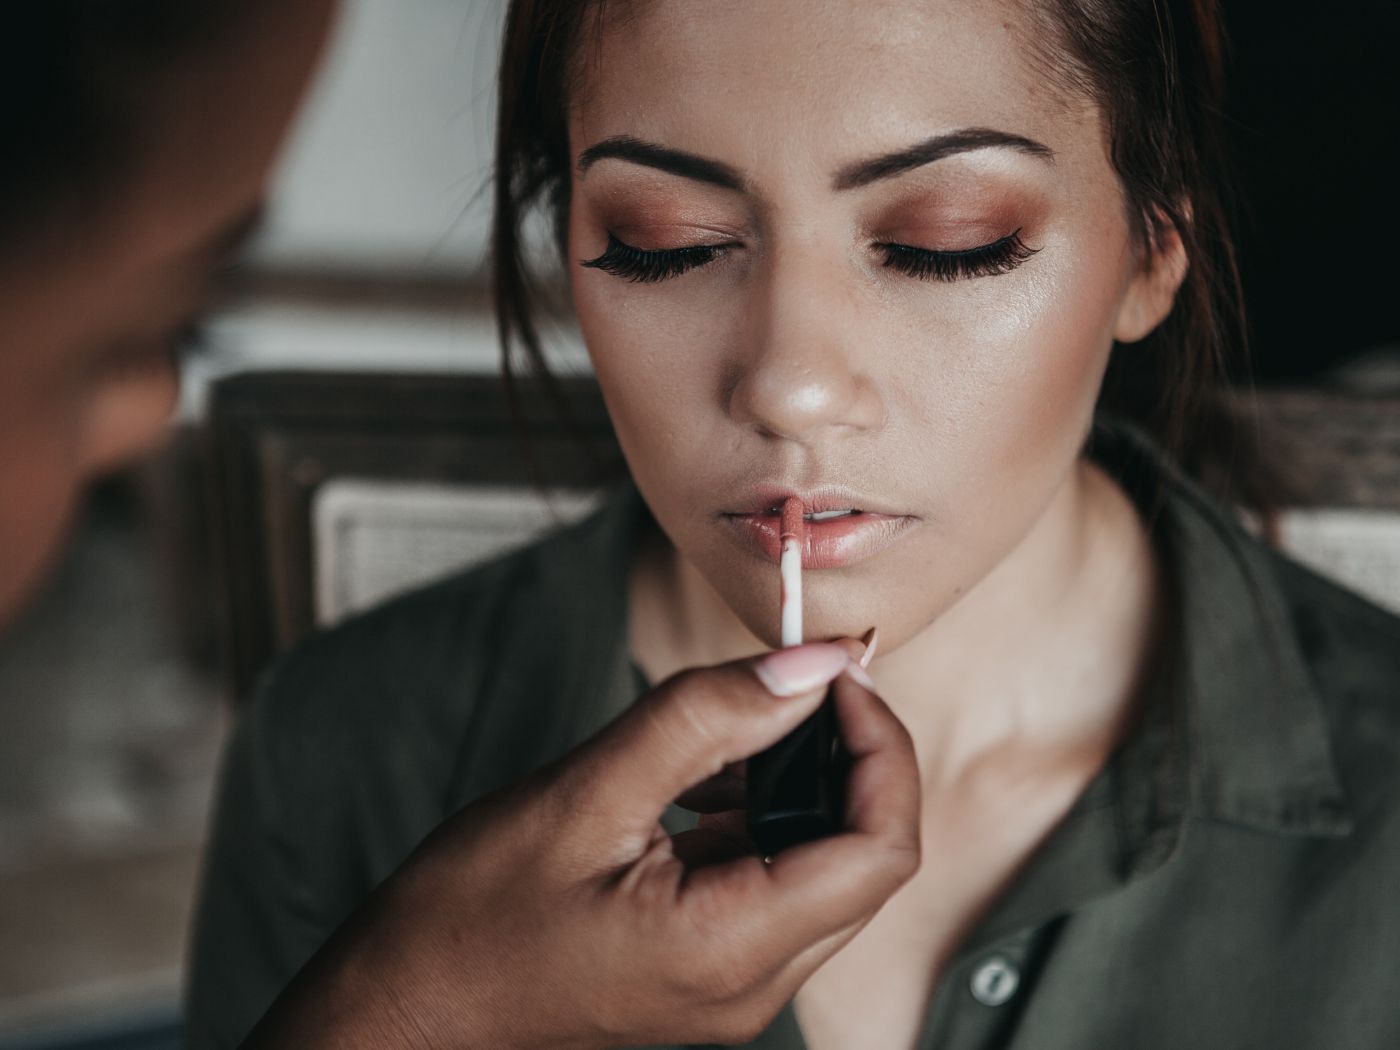 Make up artist applying lip gloss to a woman's lips